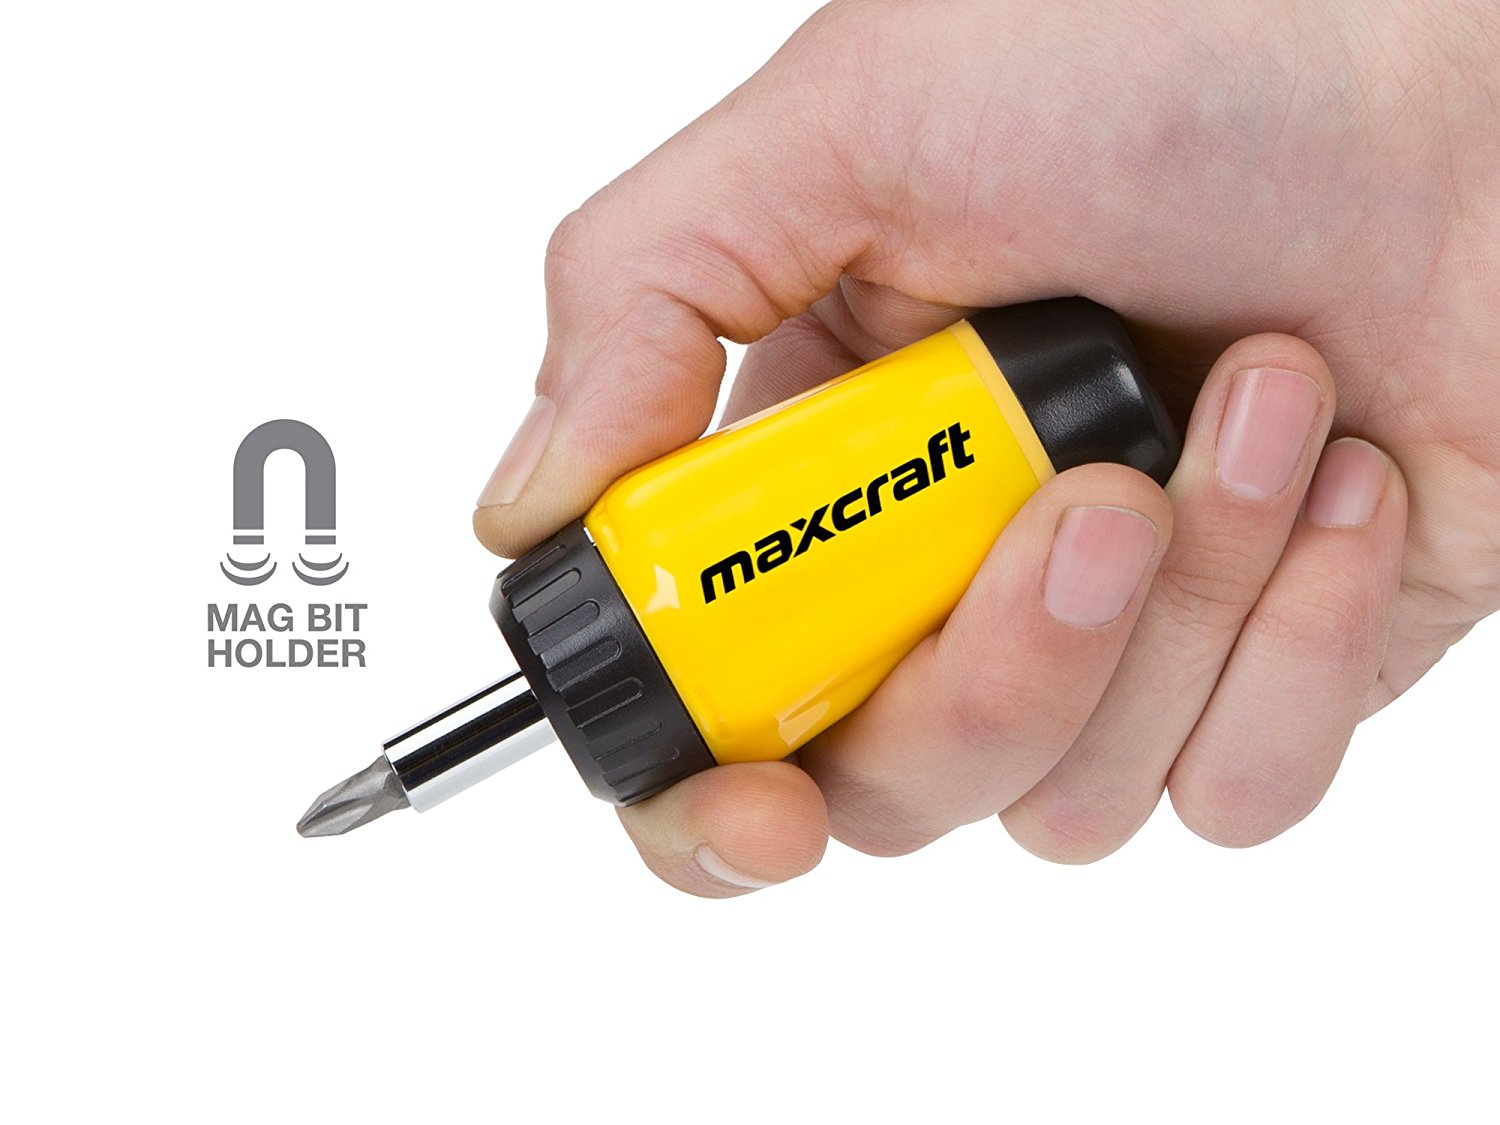 Maxcraft 60599 Gearless Stubby Ratchet Screwdriver 6 in 1 Bits Set Multi Bit